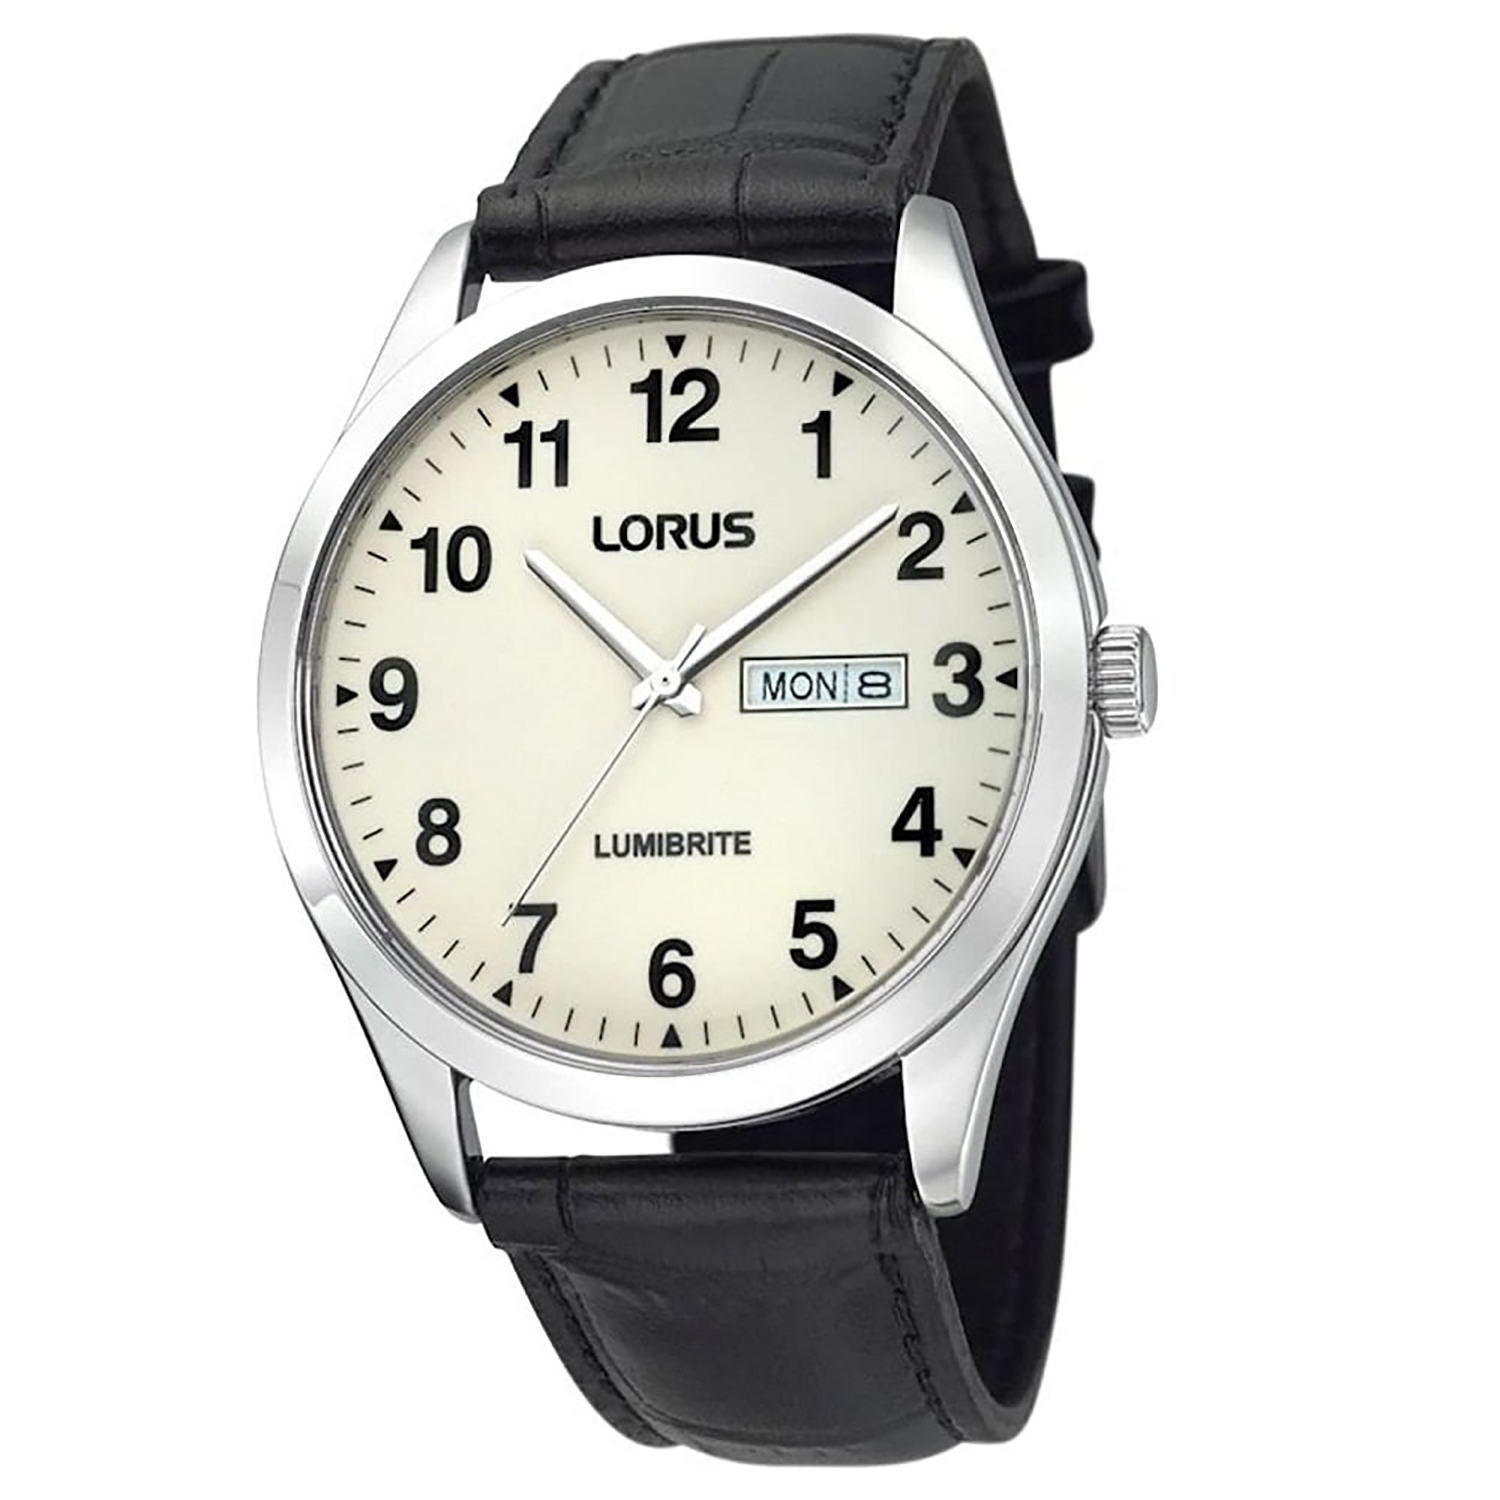 RJ647AX9 Lorus Lumibrite-Dial Watch